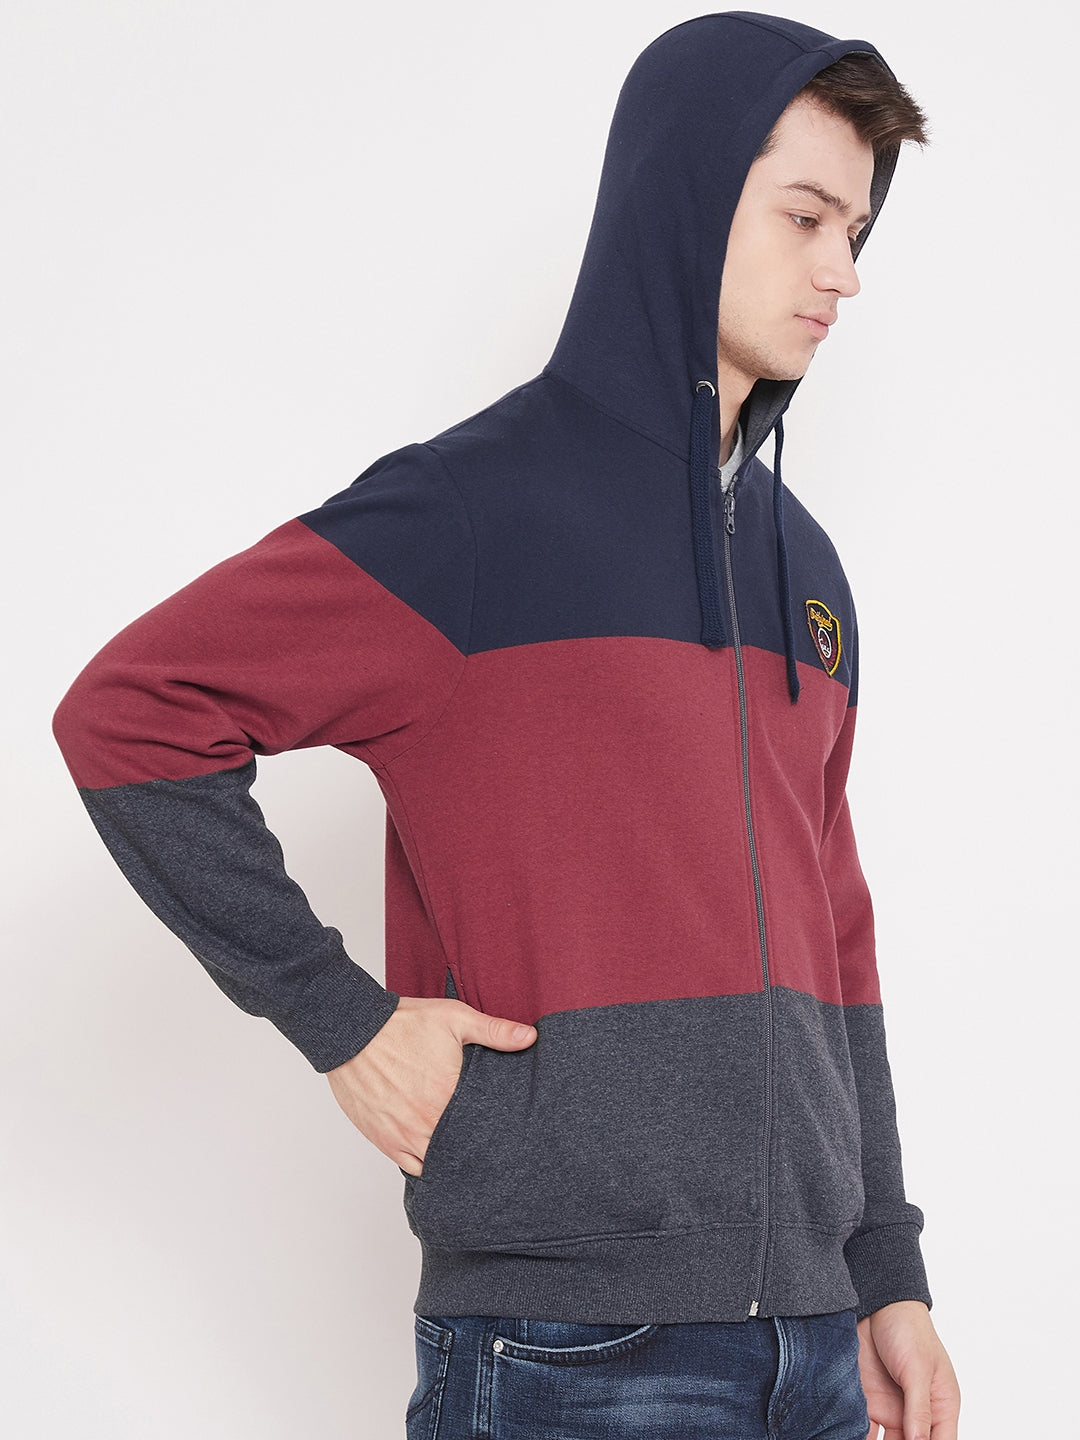 Austin Wood Men's Multi Full Sleeves Hooded Colorblocked Sweatshirt